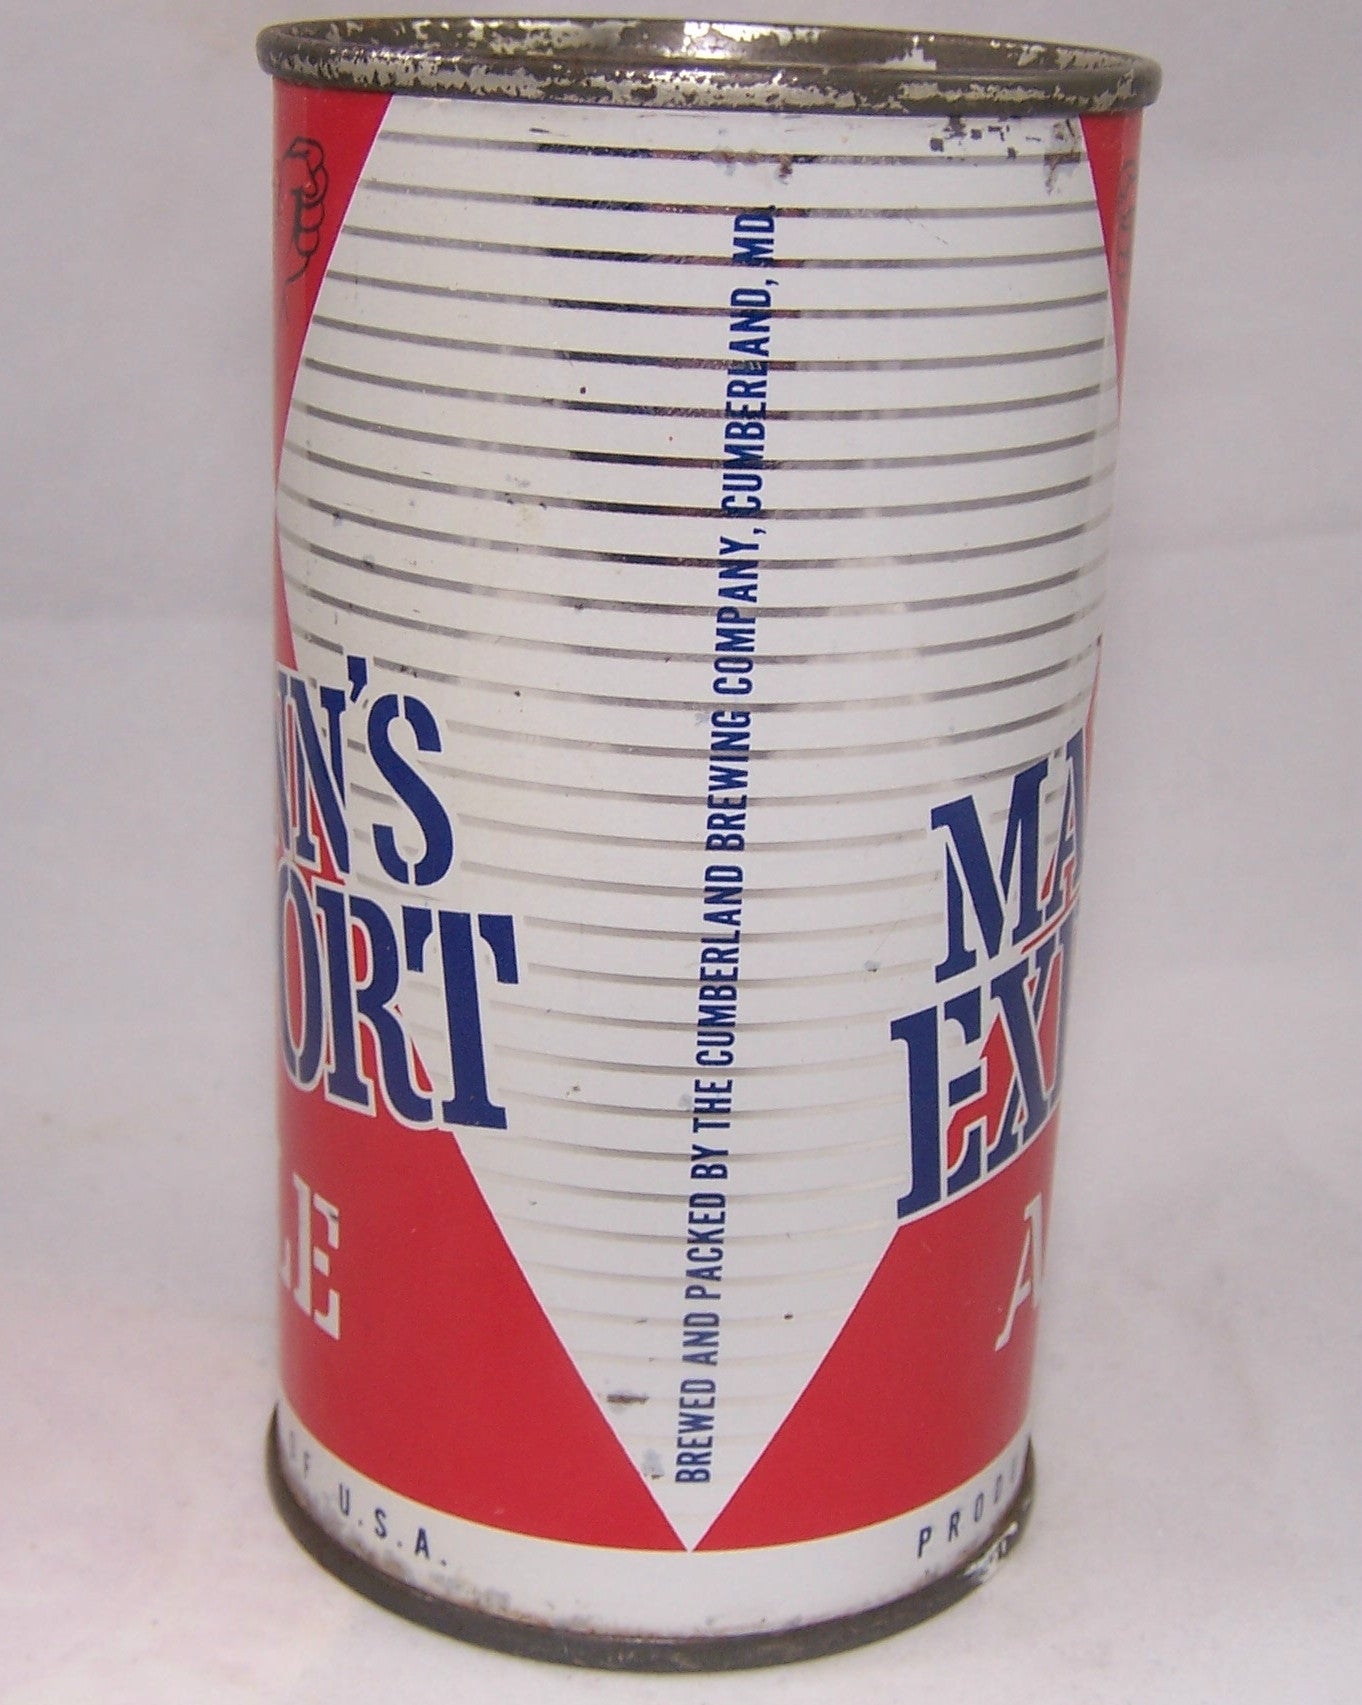 Mann's Export Ale, USBC 94-33, Grade 1-